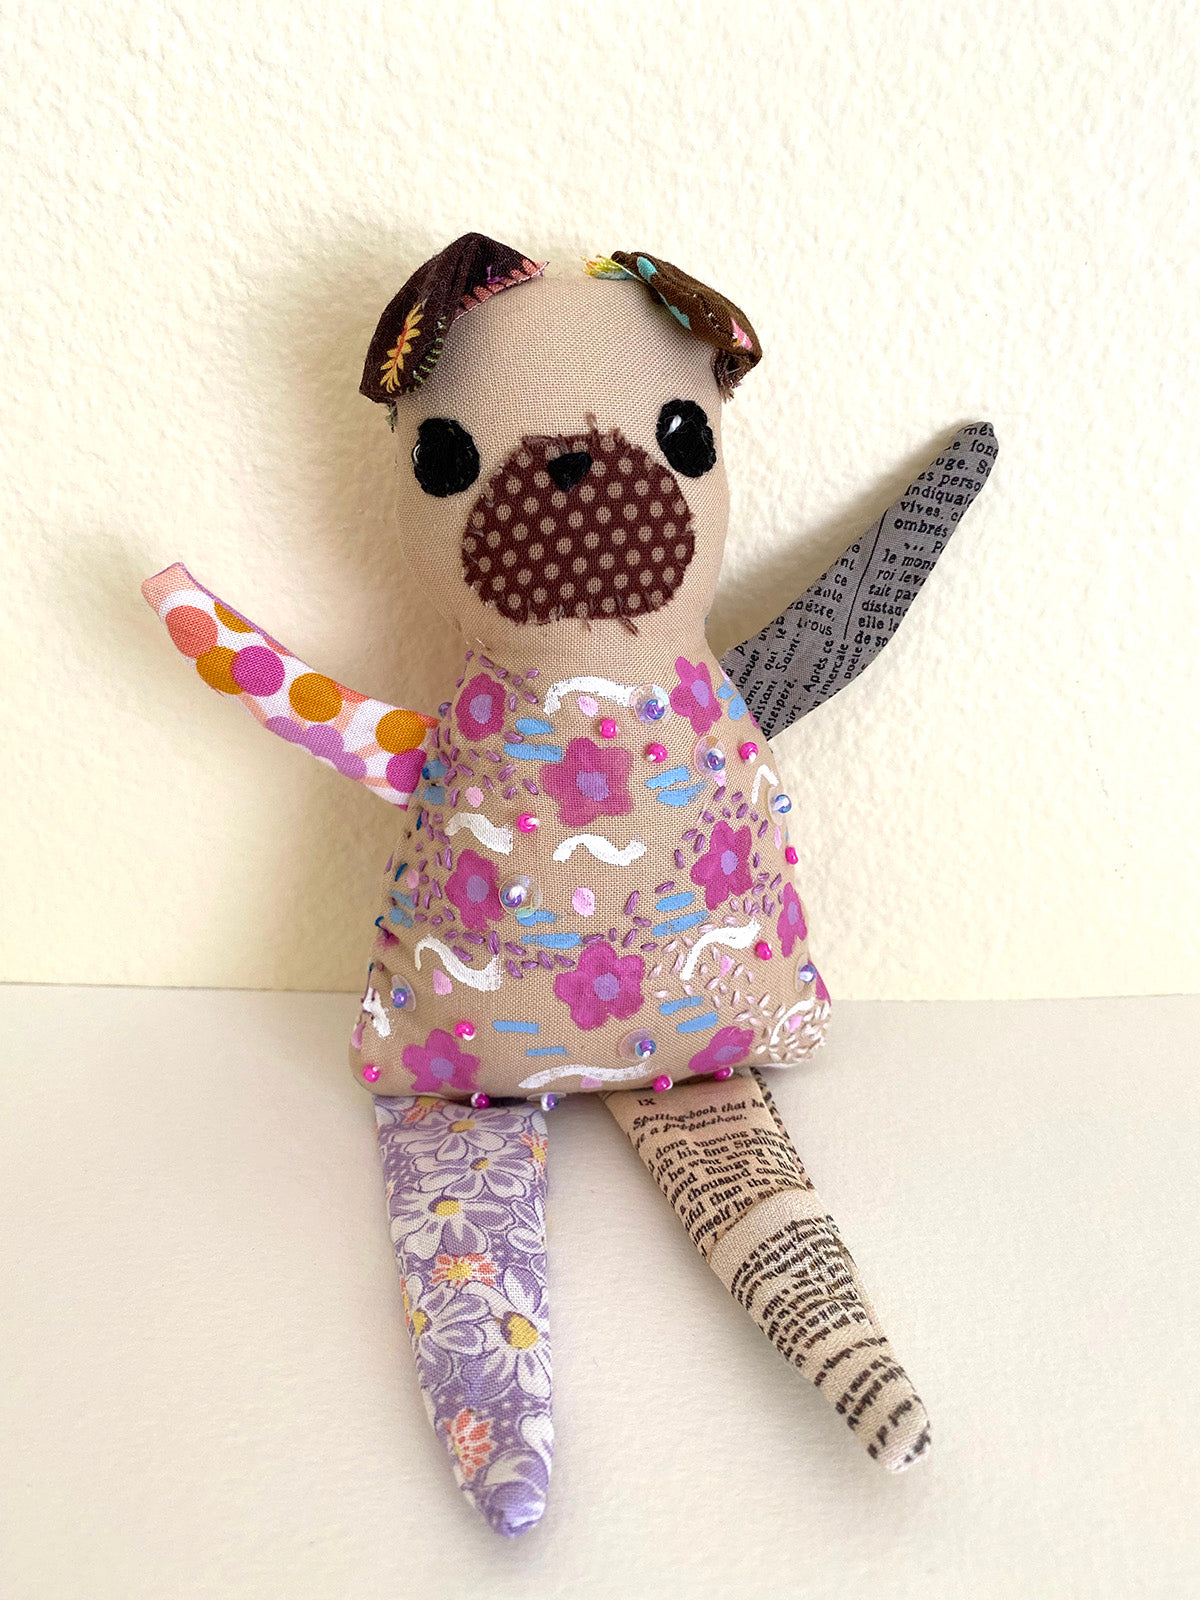 Rag Pug no. 1 - Original Pug Textile Art Doll